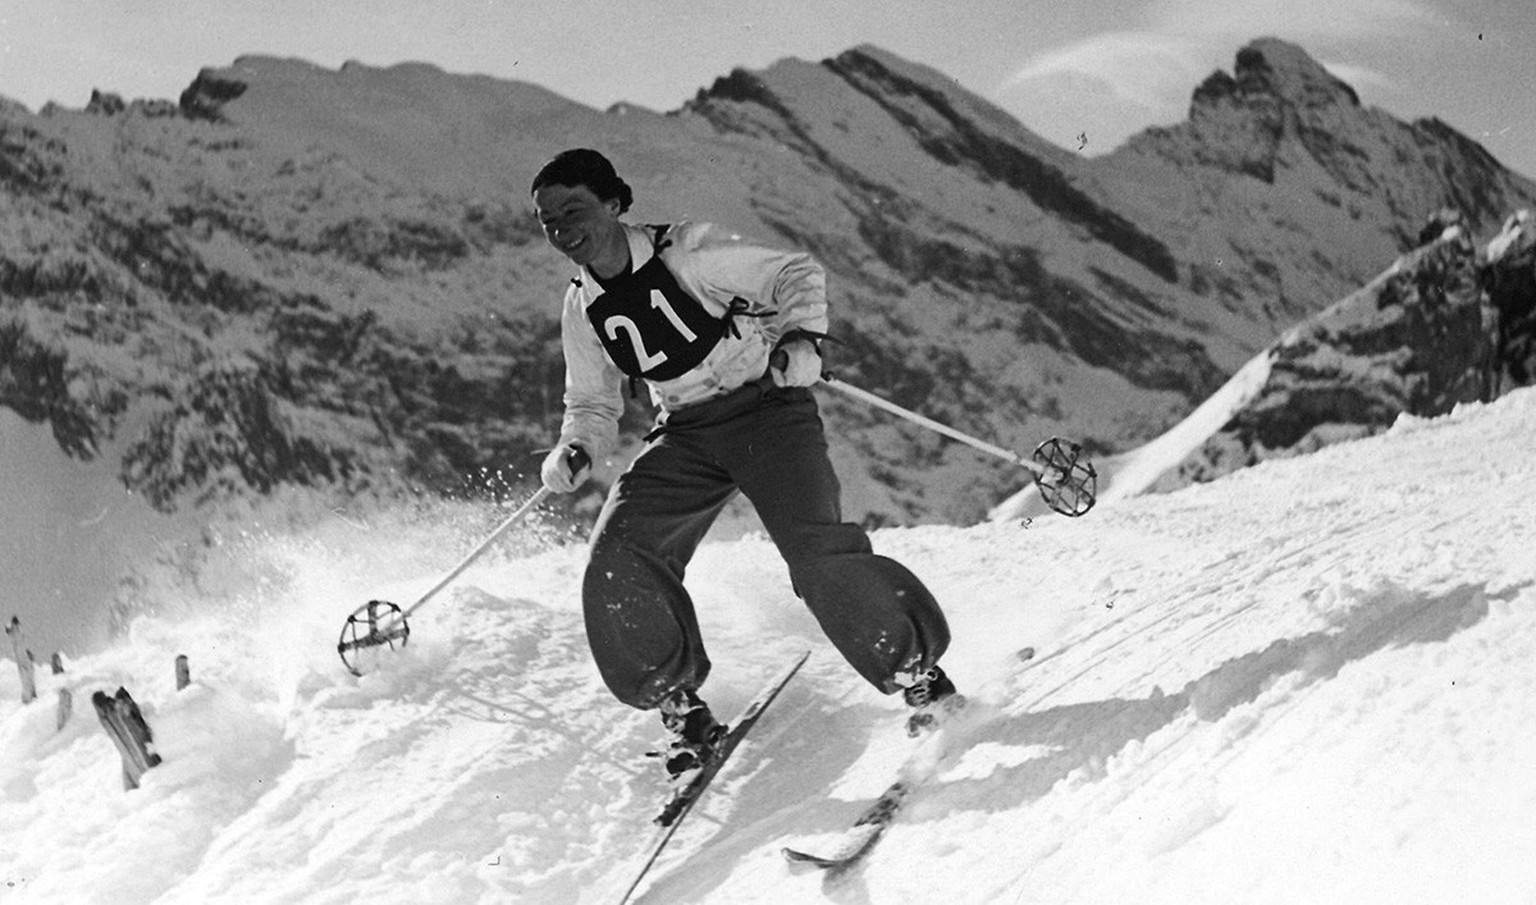 Rösli Streiff en 1934 lors de la «No Fall Race» à Mürren (auteur inconnu).
https://www.freulerpalast.ch/ausstellungen_und_events/staendige_ausstellung/skisportmuseum/